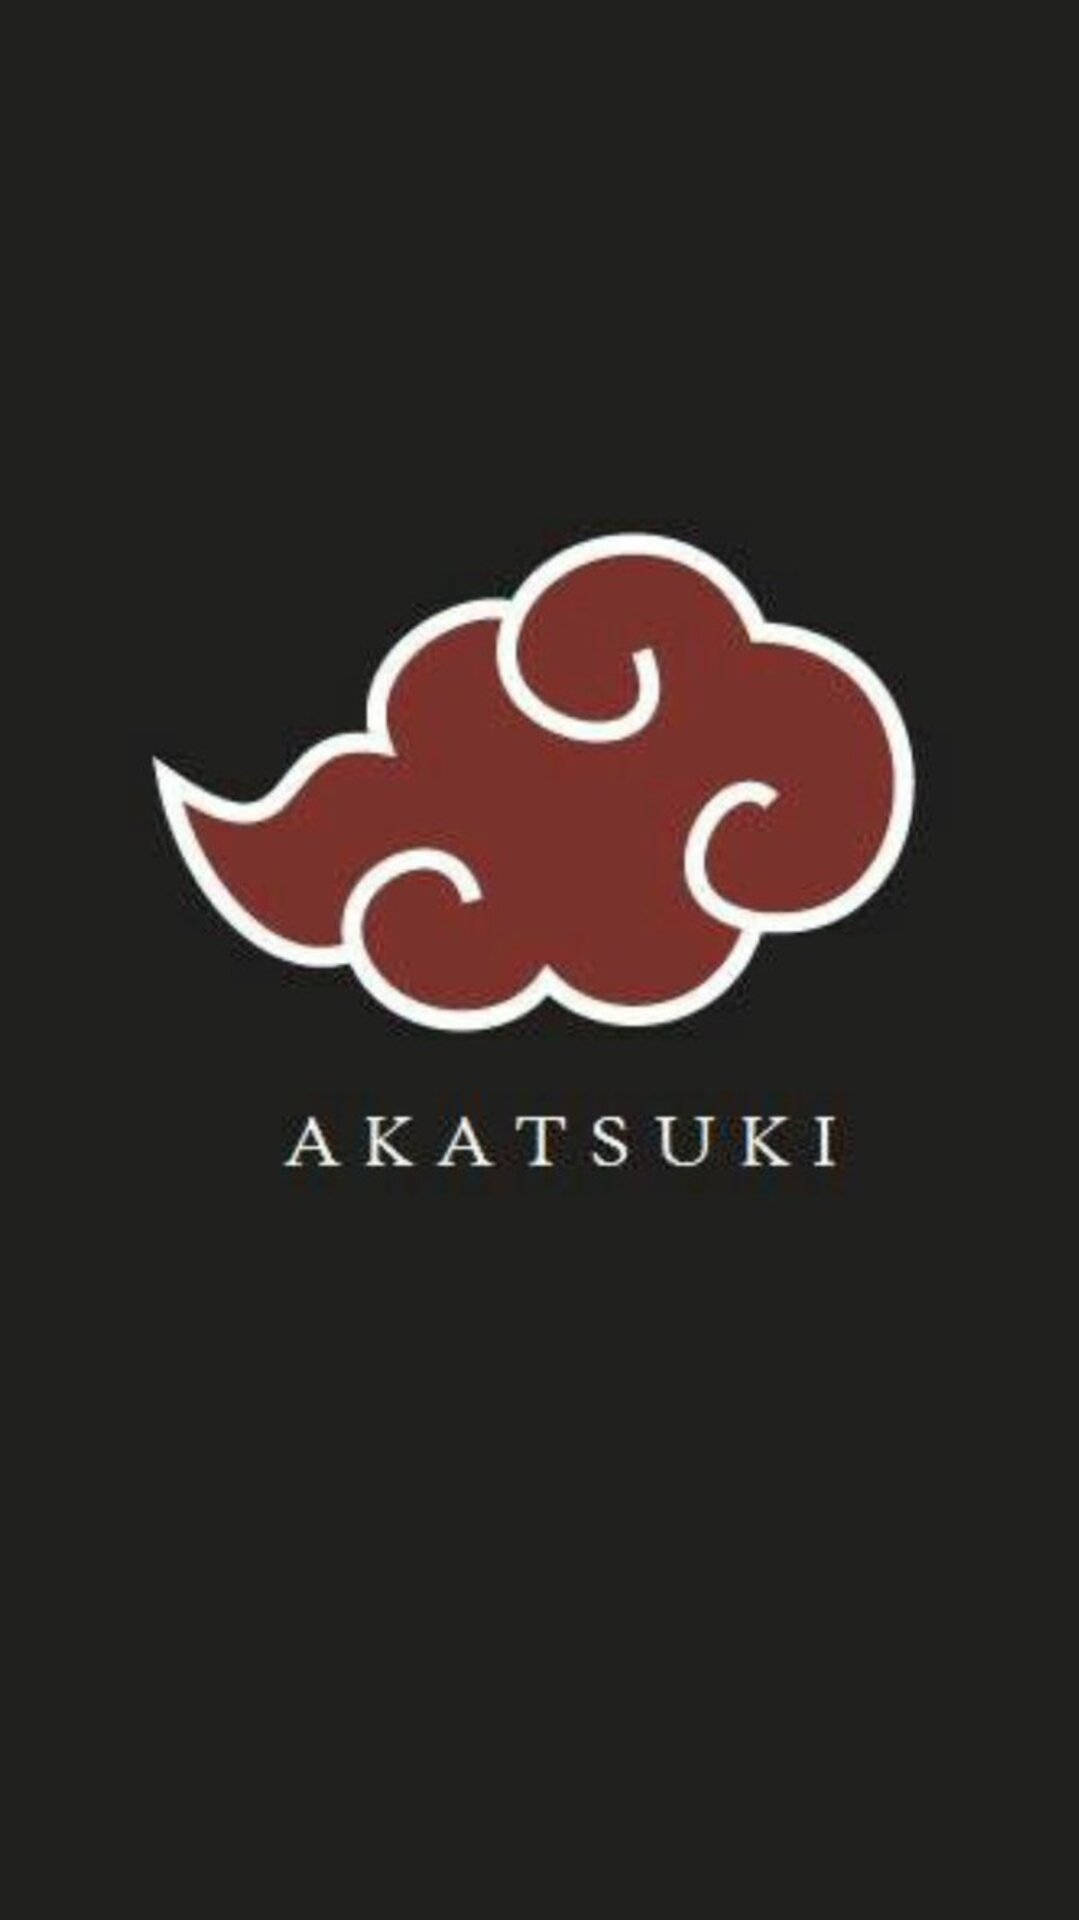 Faded Akatsuki Cloud IPhone Background Wallpaper